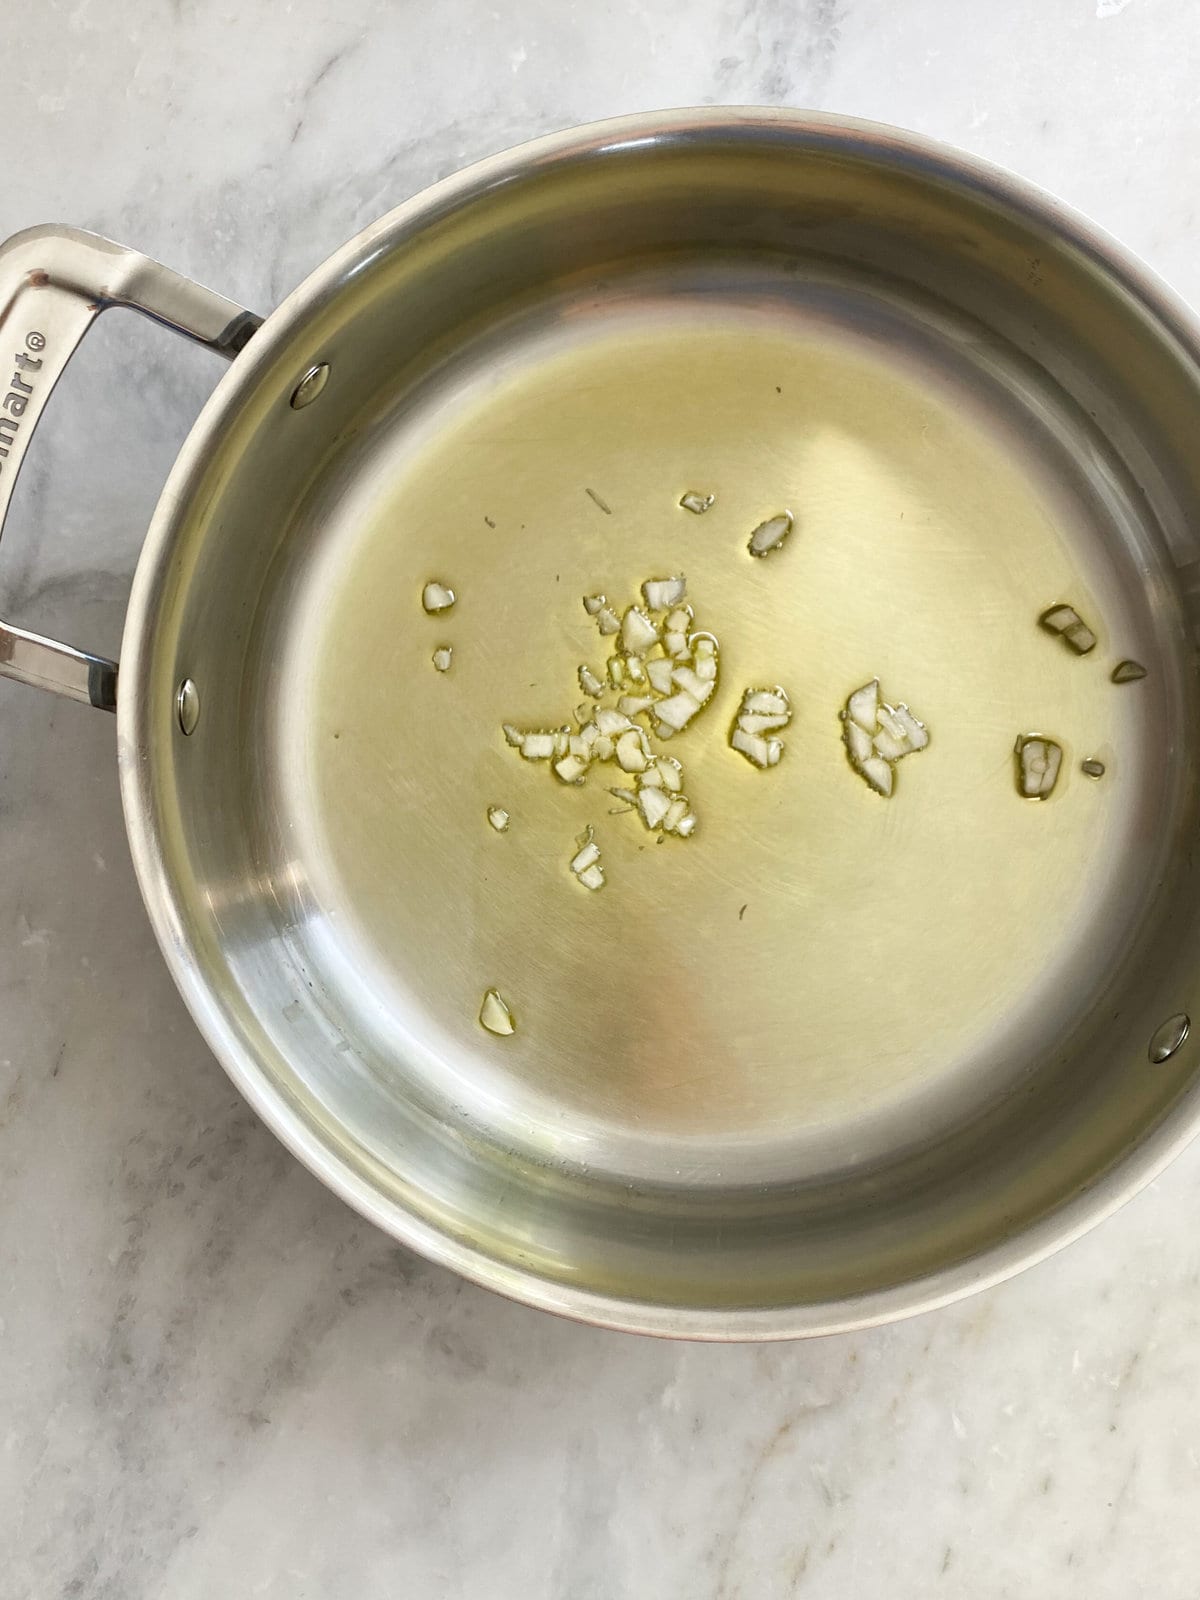 process- sautéing garlic in olive oil